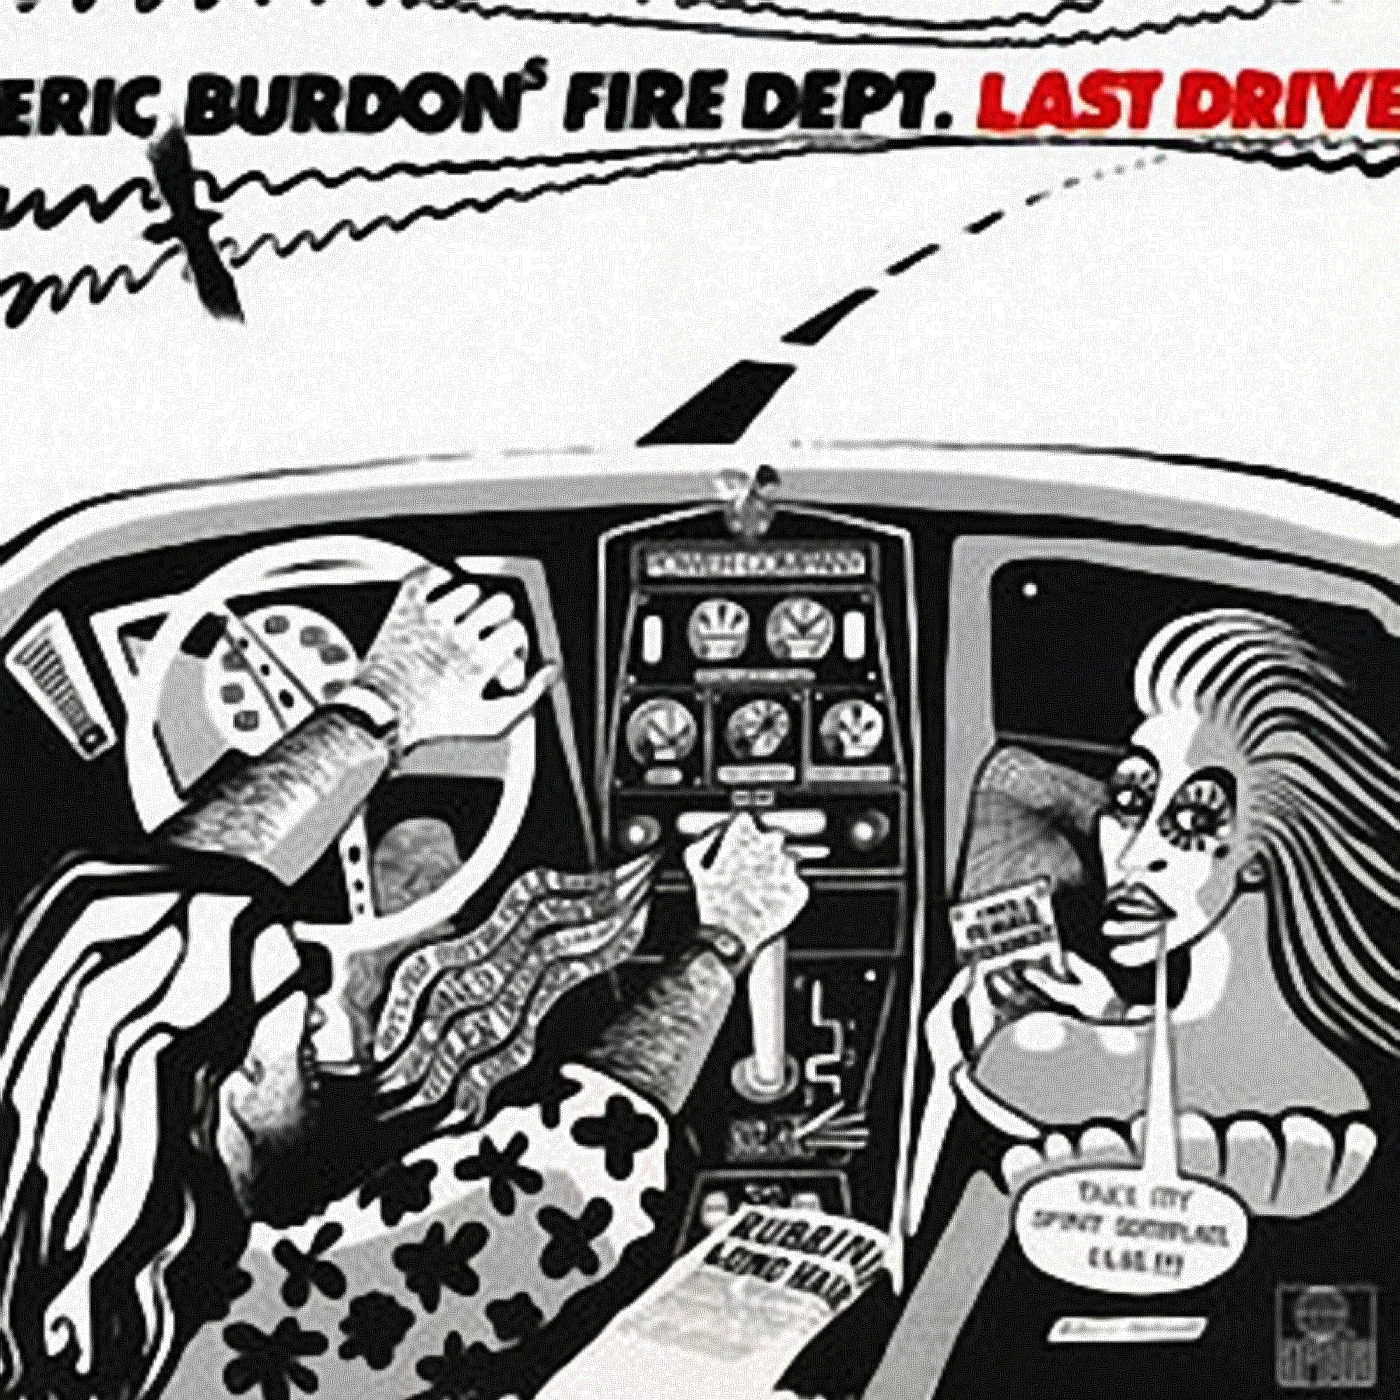 Eric Burdon's Fire Dept - Last Drive